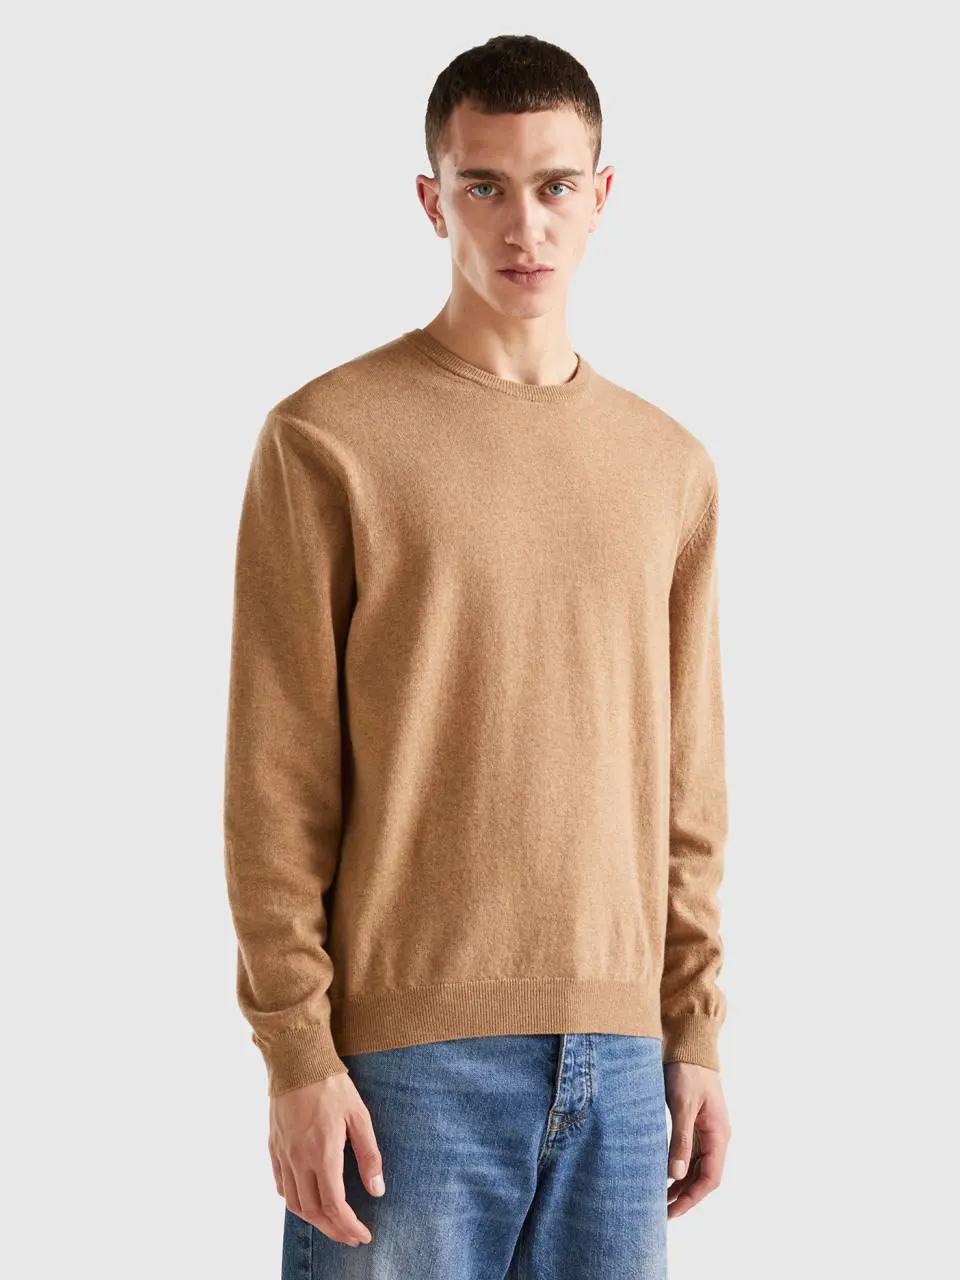 Benetton beige crew neck sweater in pure merino wool. 1